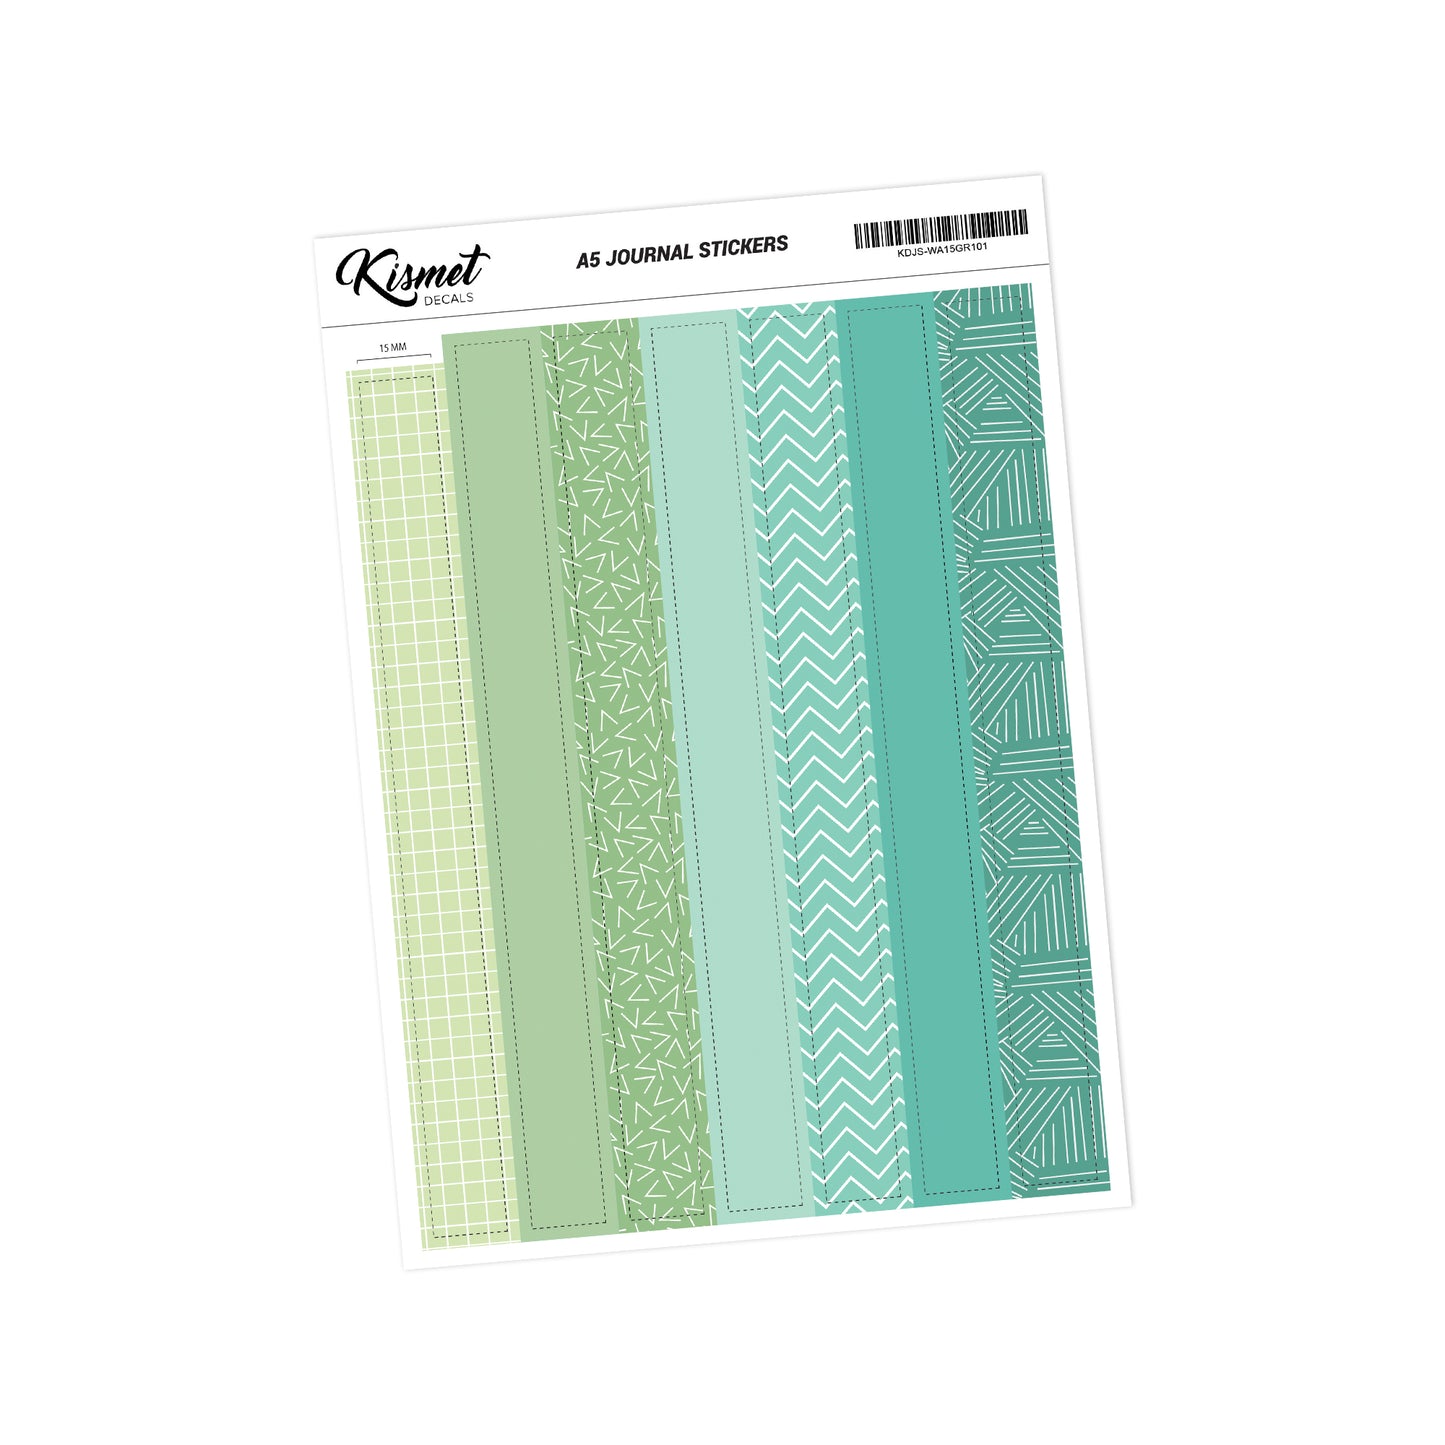 0.6" Washi Tape Design Sticker - 7 Pieces 5.3" X 8.3" - Craft Scrapbook Junk Journal Snail Mail Planner Journal Diary Paper Sticker Sheet